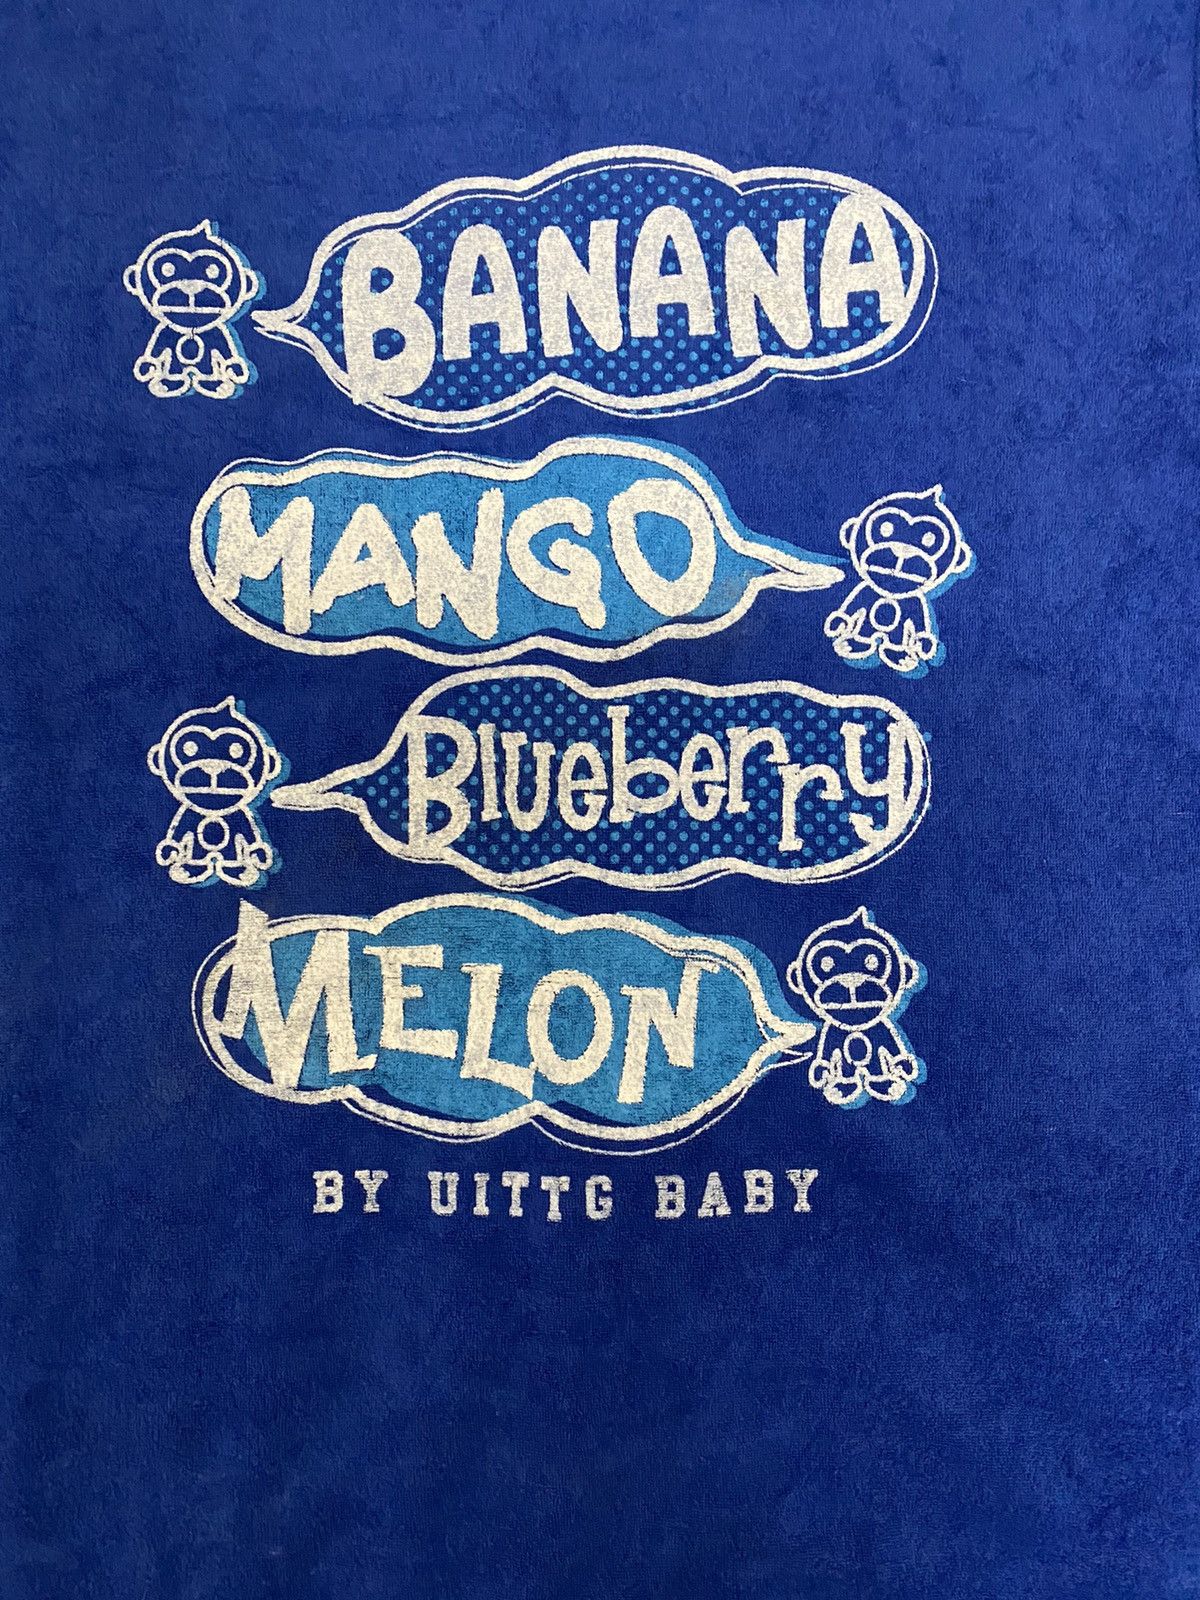 Japanese Brand - Banana Aape Baby Milo - 3